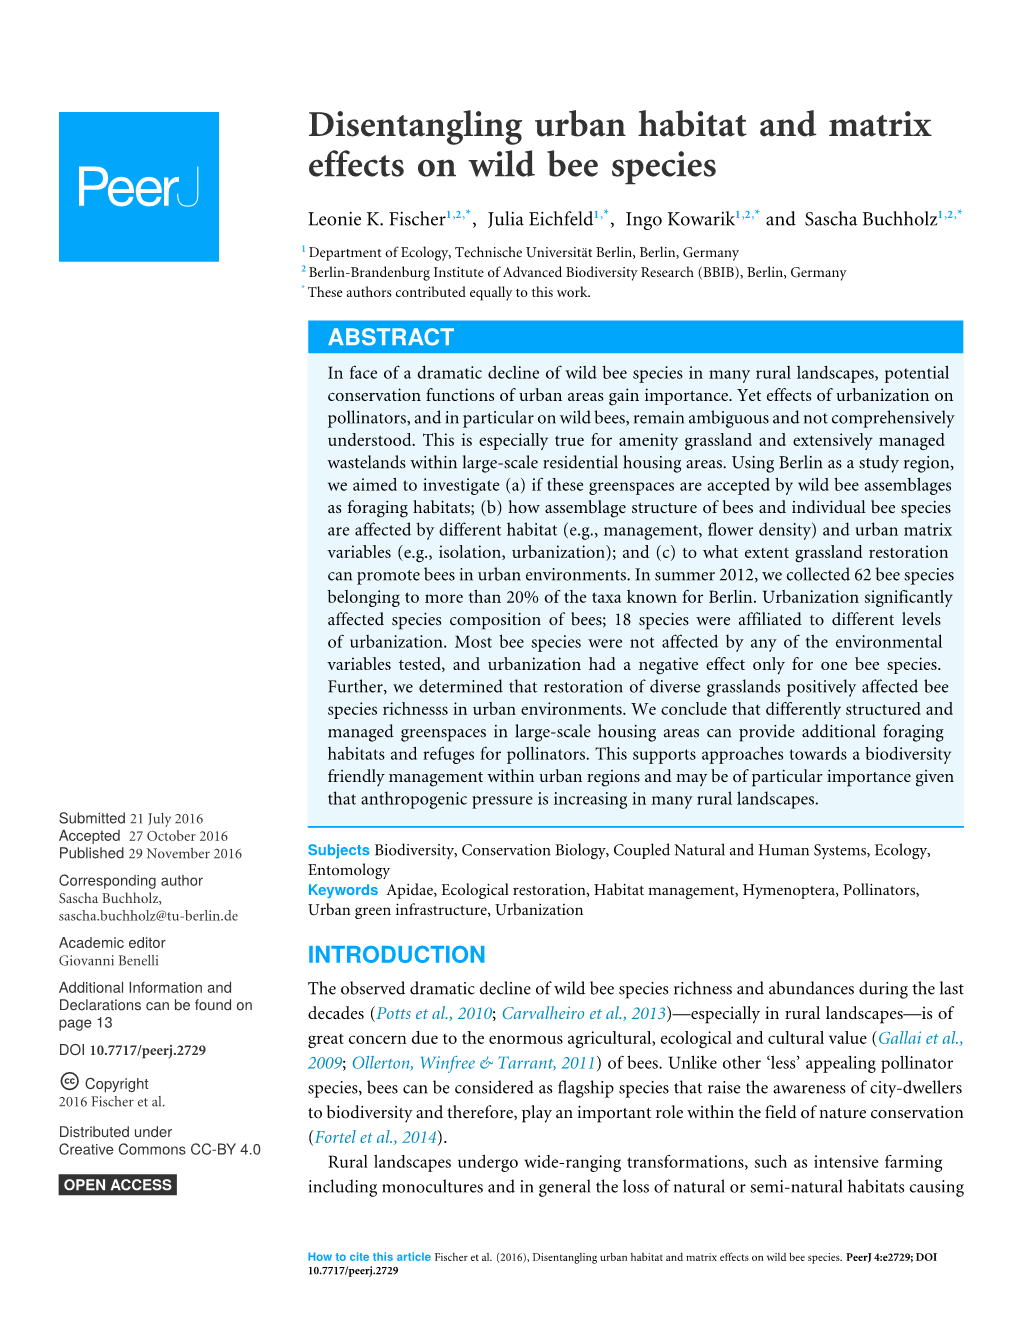 Disentangling Urban Habitat and Matrix Effects on Wild Bee Species